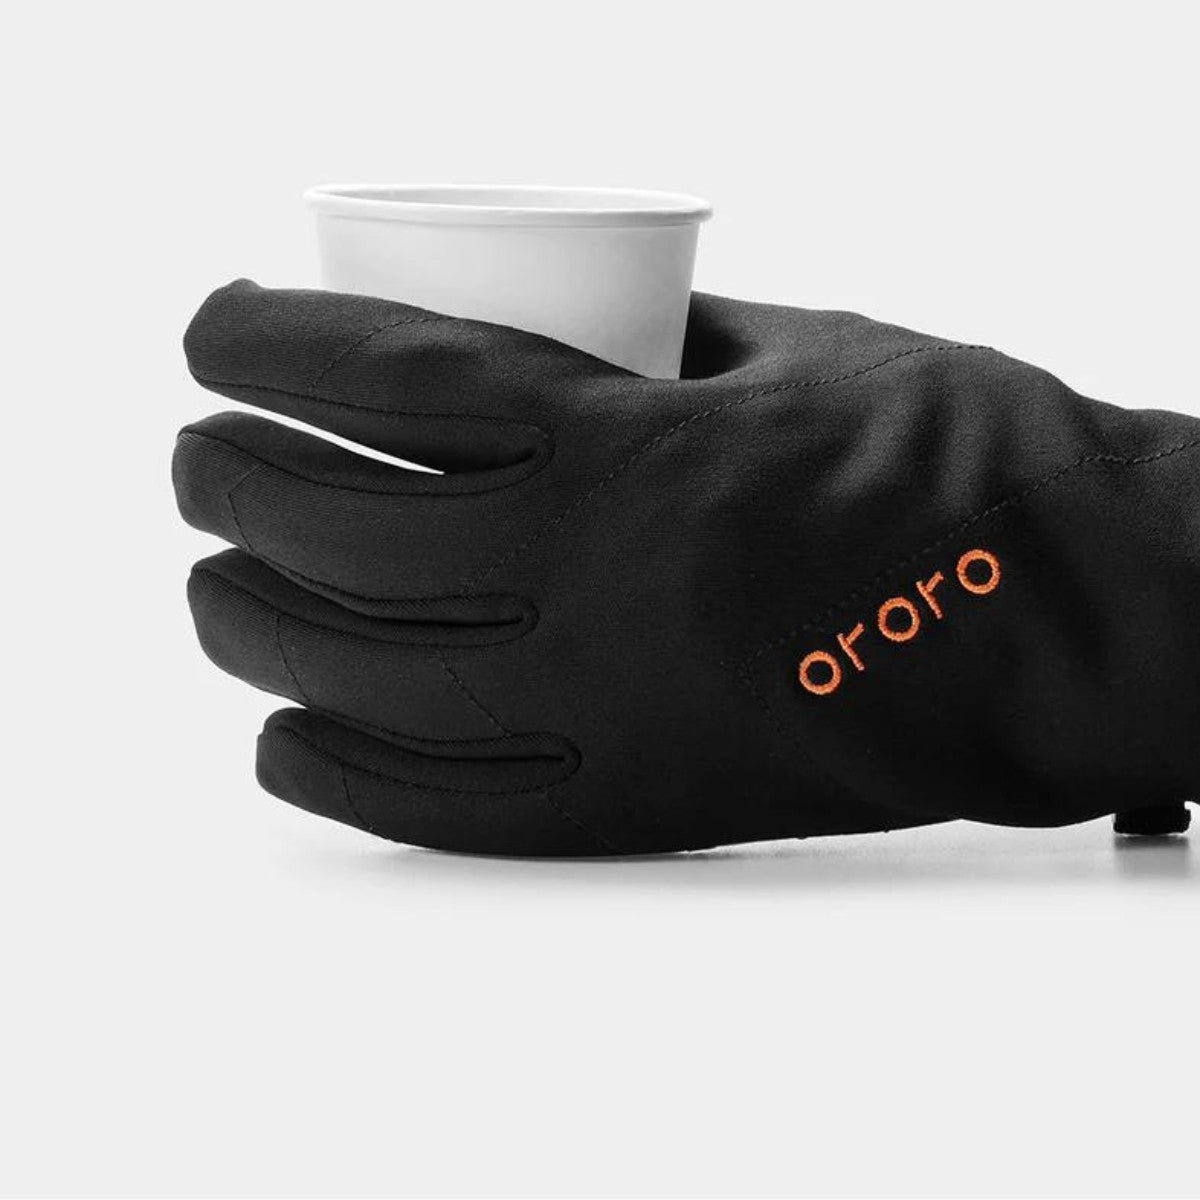 Ororo Glasgow Heated Glove Liners